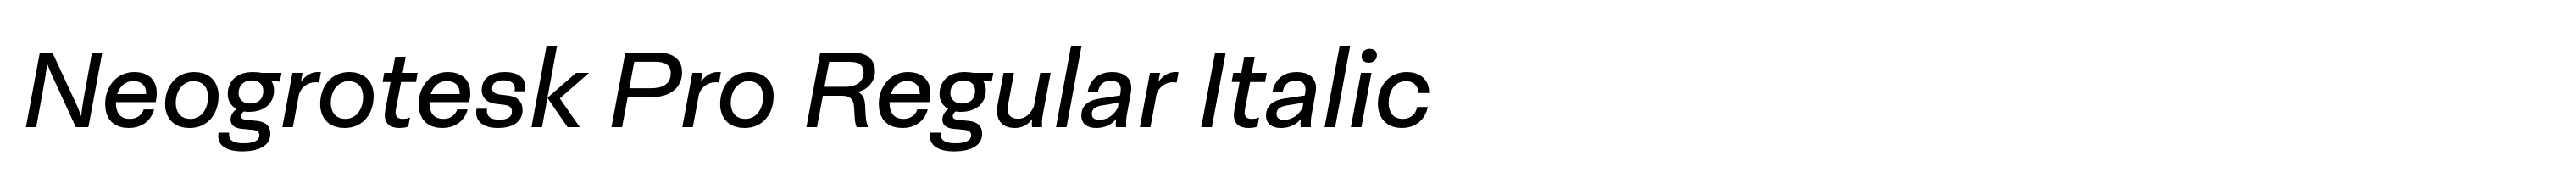 Neogrotesk Pro Regular Italic